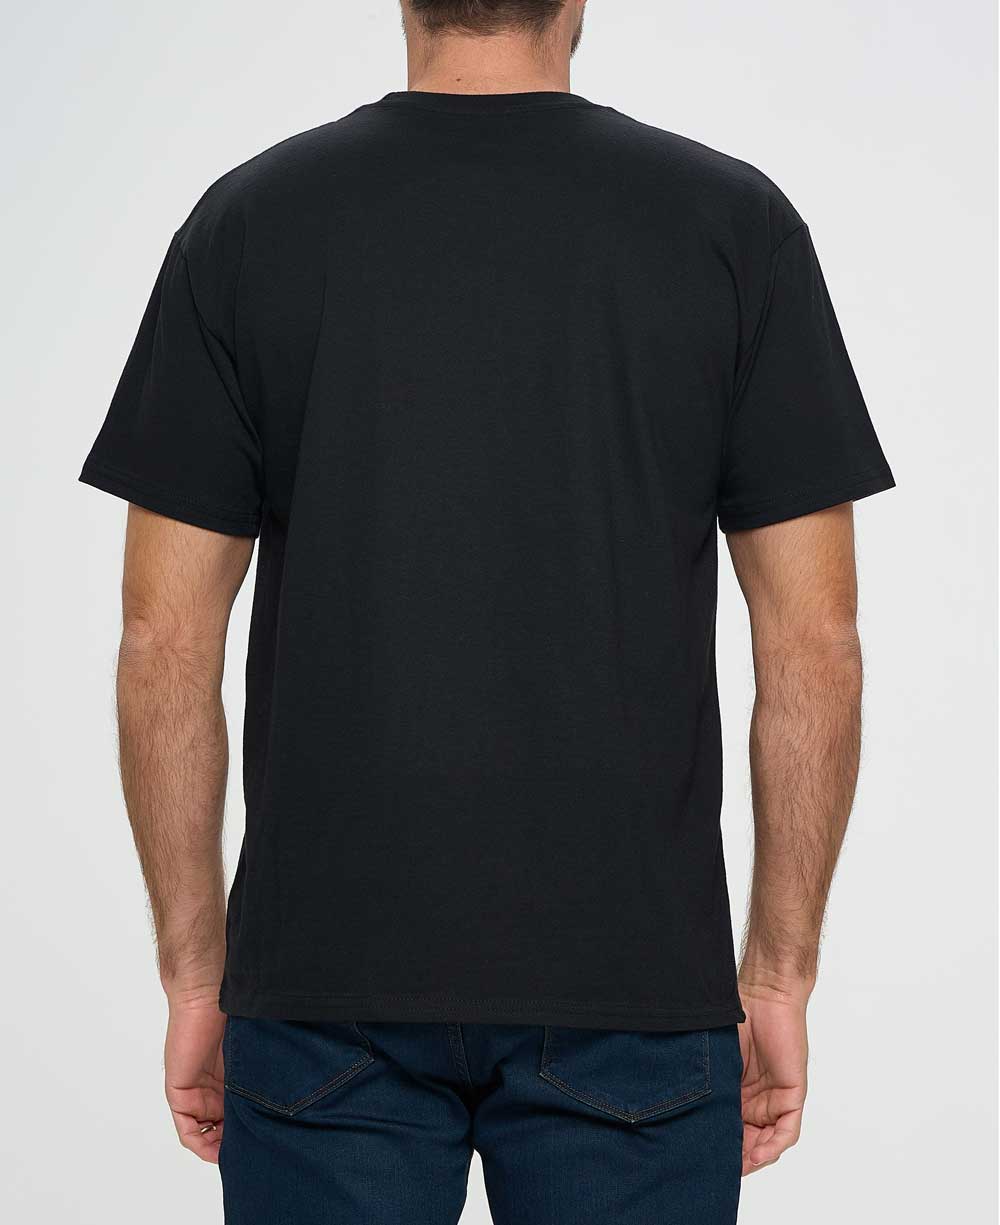 Men’s Organic Cotton Inspirational Half Full T-Shirt, USA - Shirts & Tops S